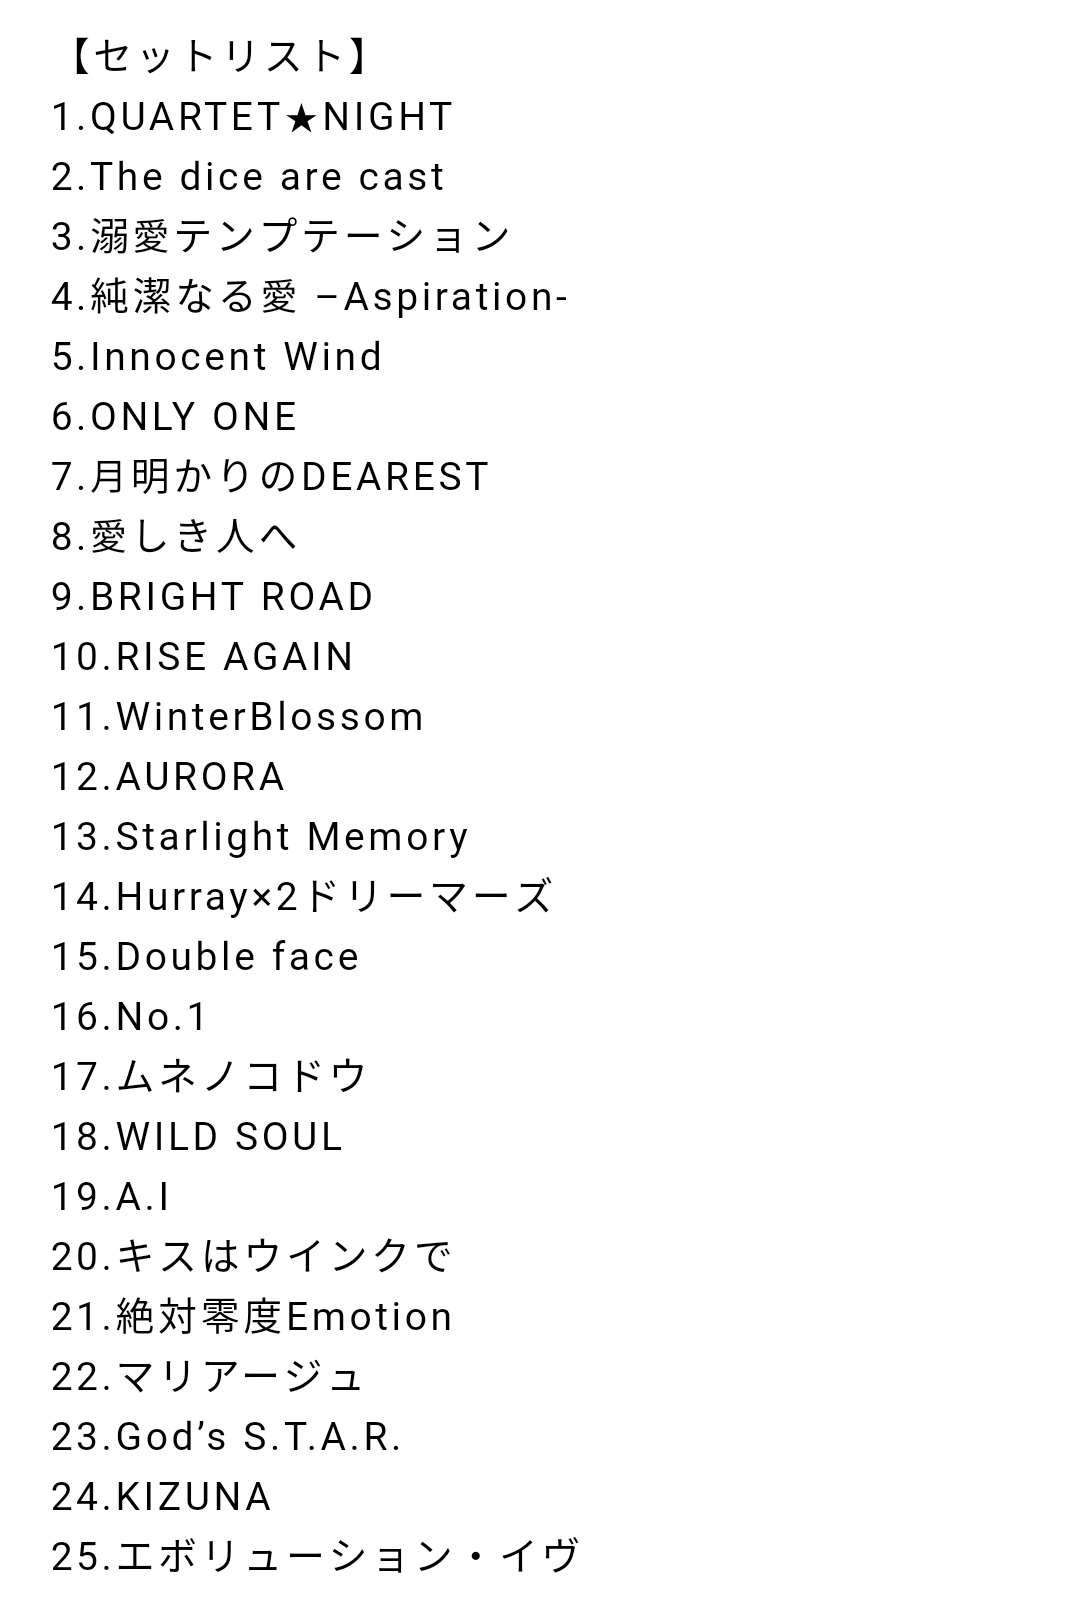 Yukinamizuki Quartet Night Live Evolution 17 Song List